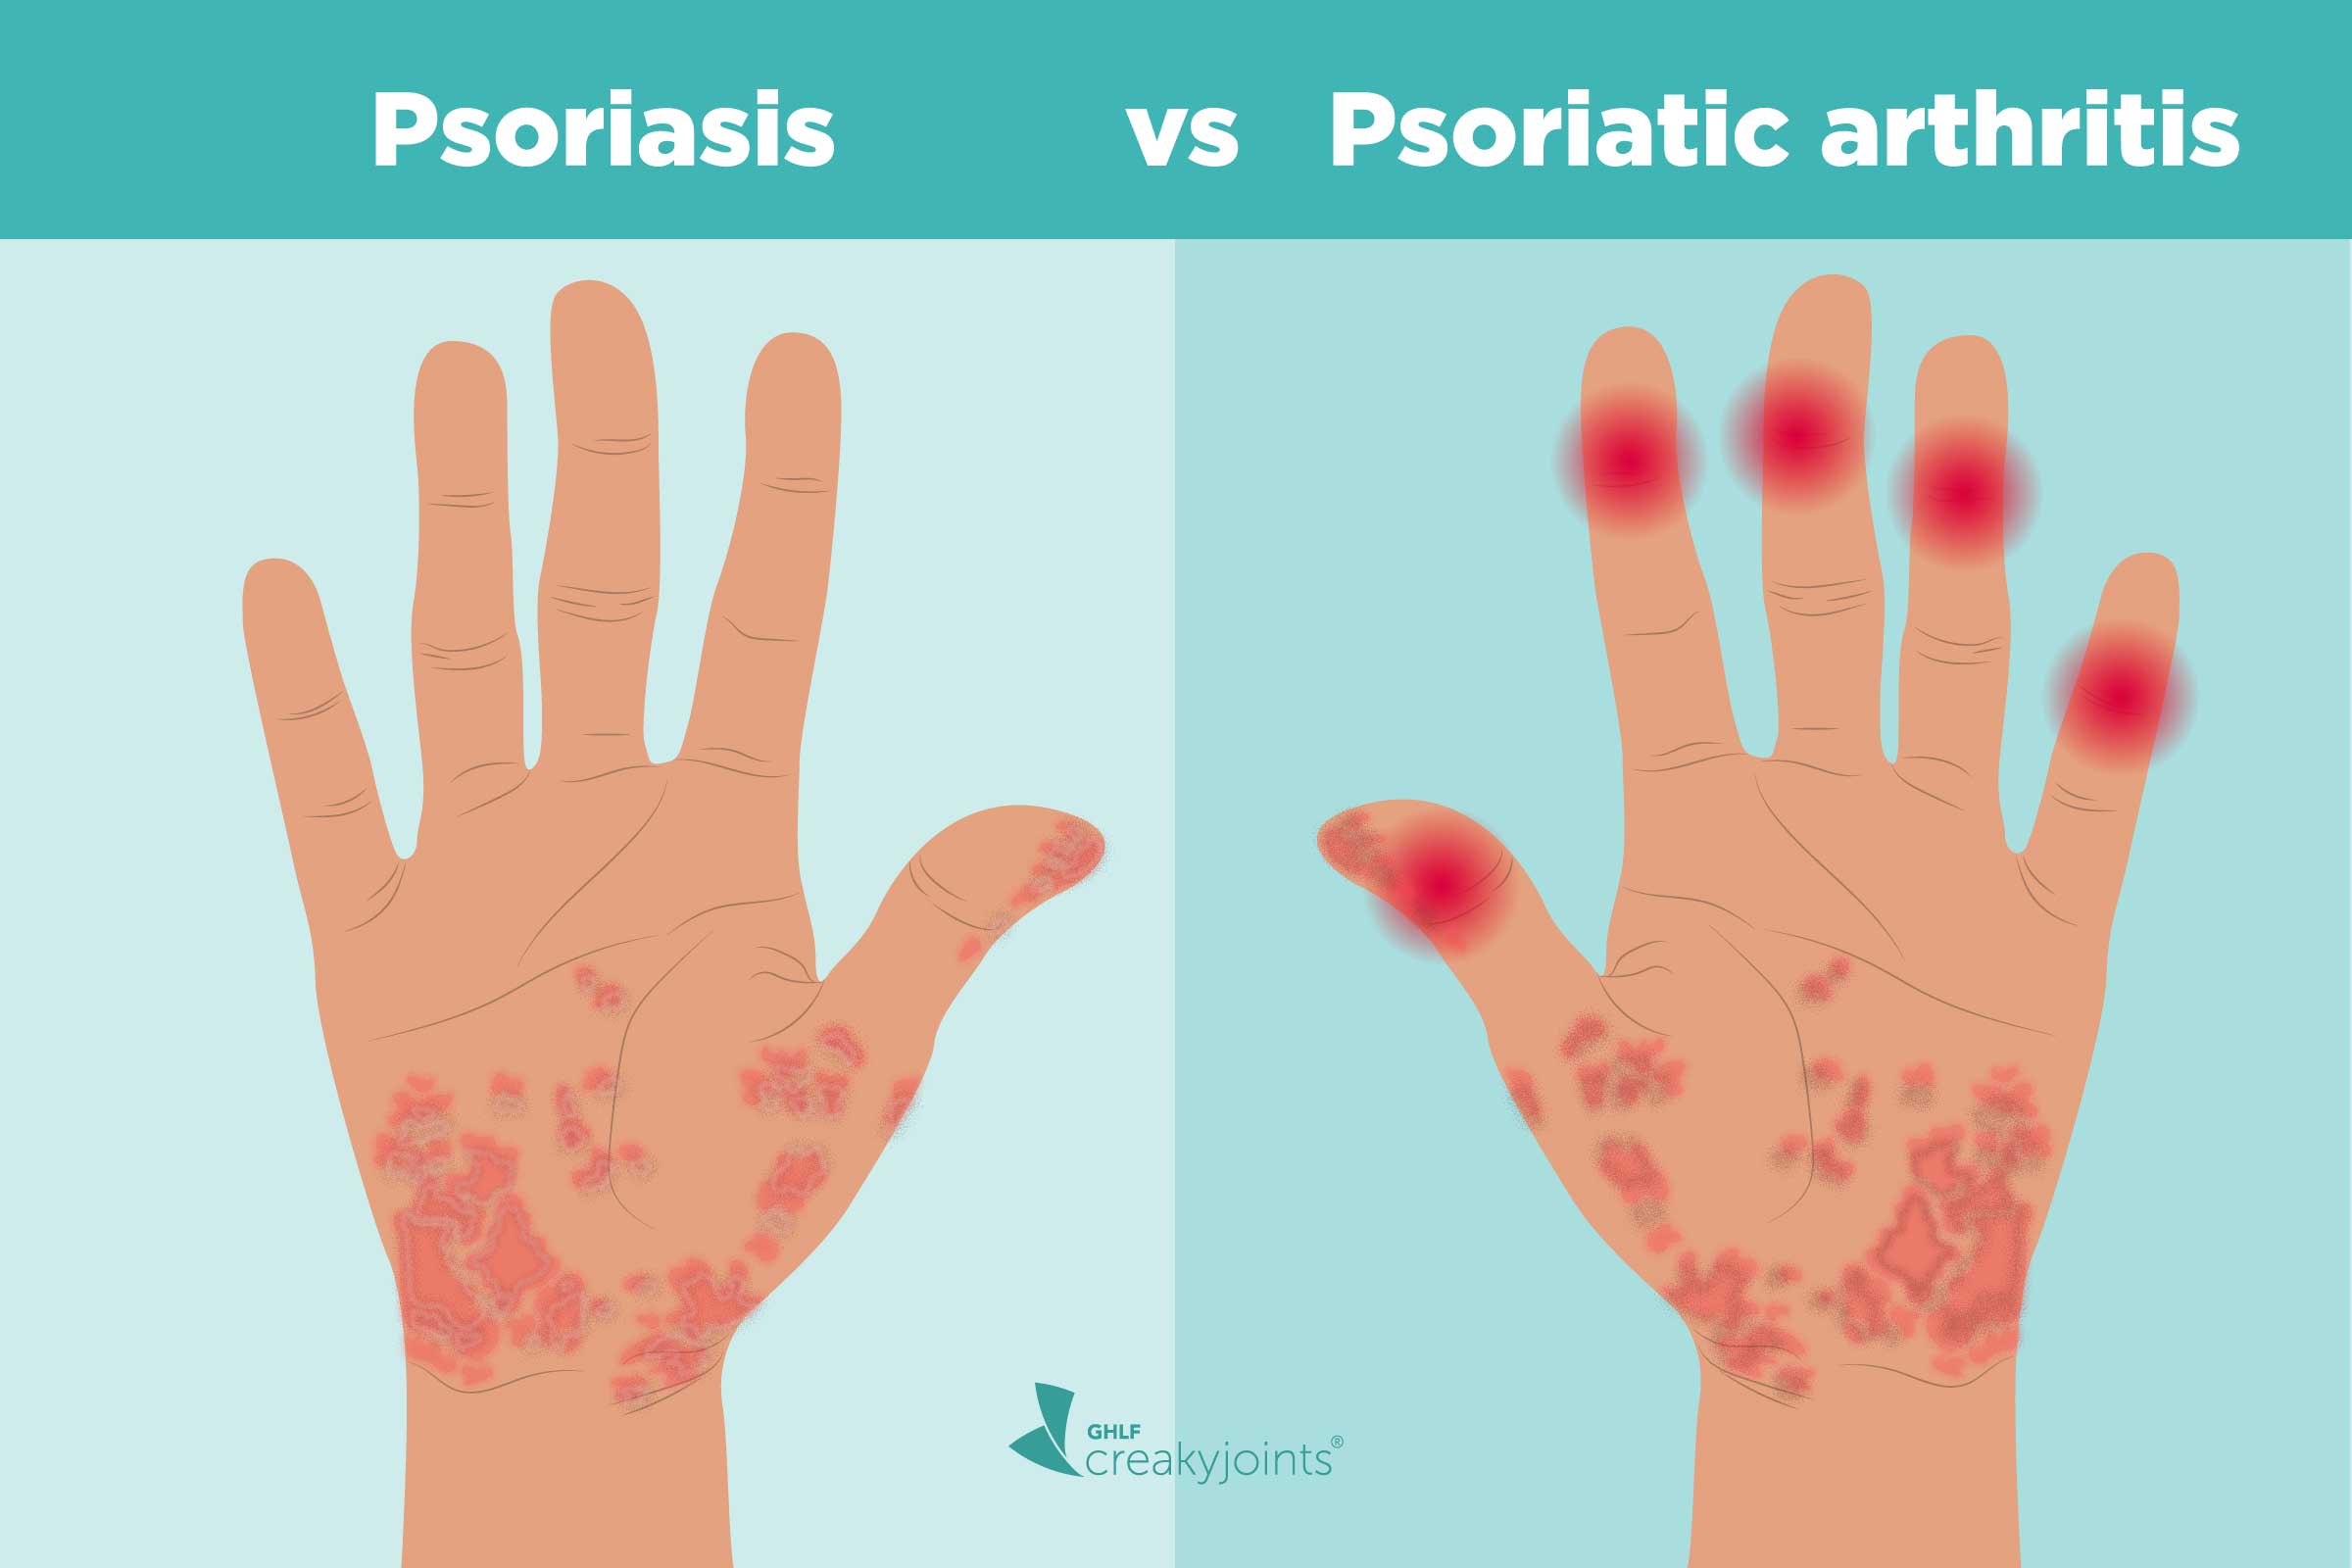 mikozoral psoriasis vélemények - Quarantine Q&A Arthritis psoriatica fotos